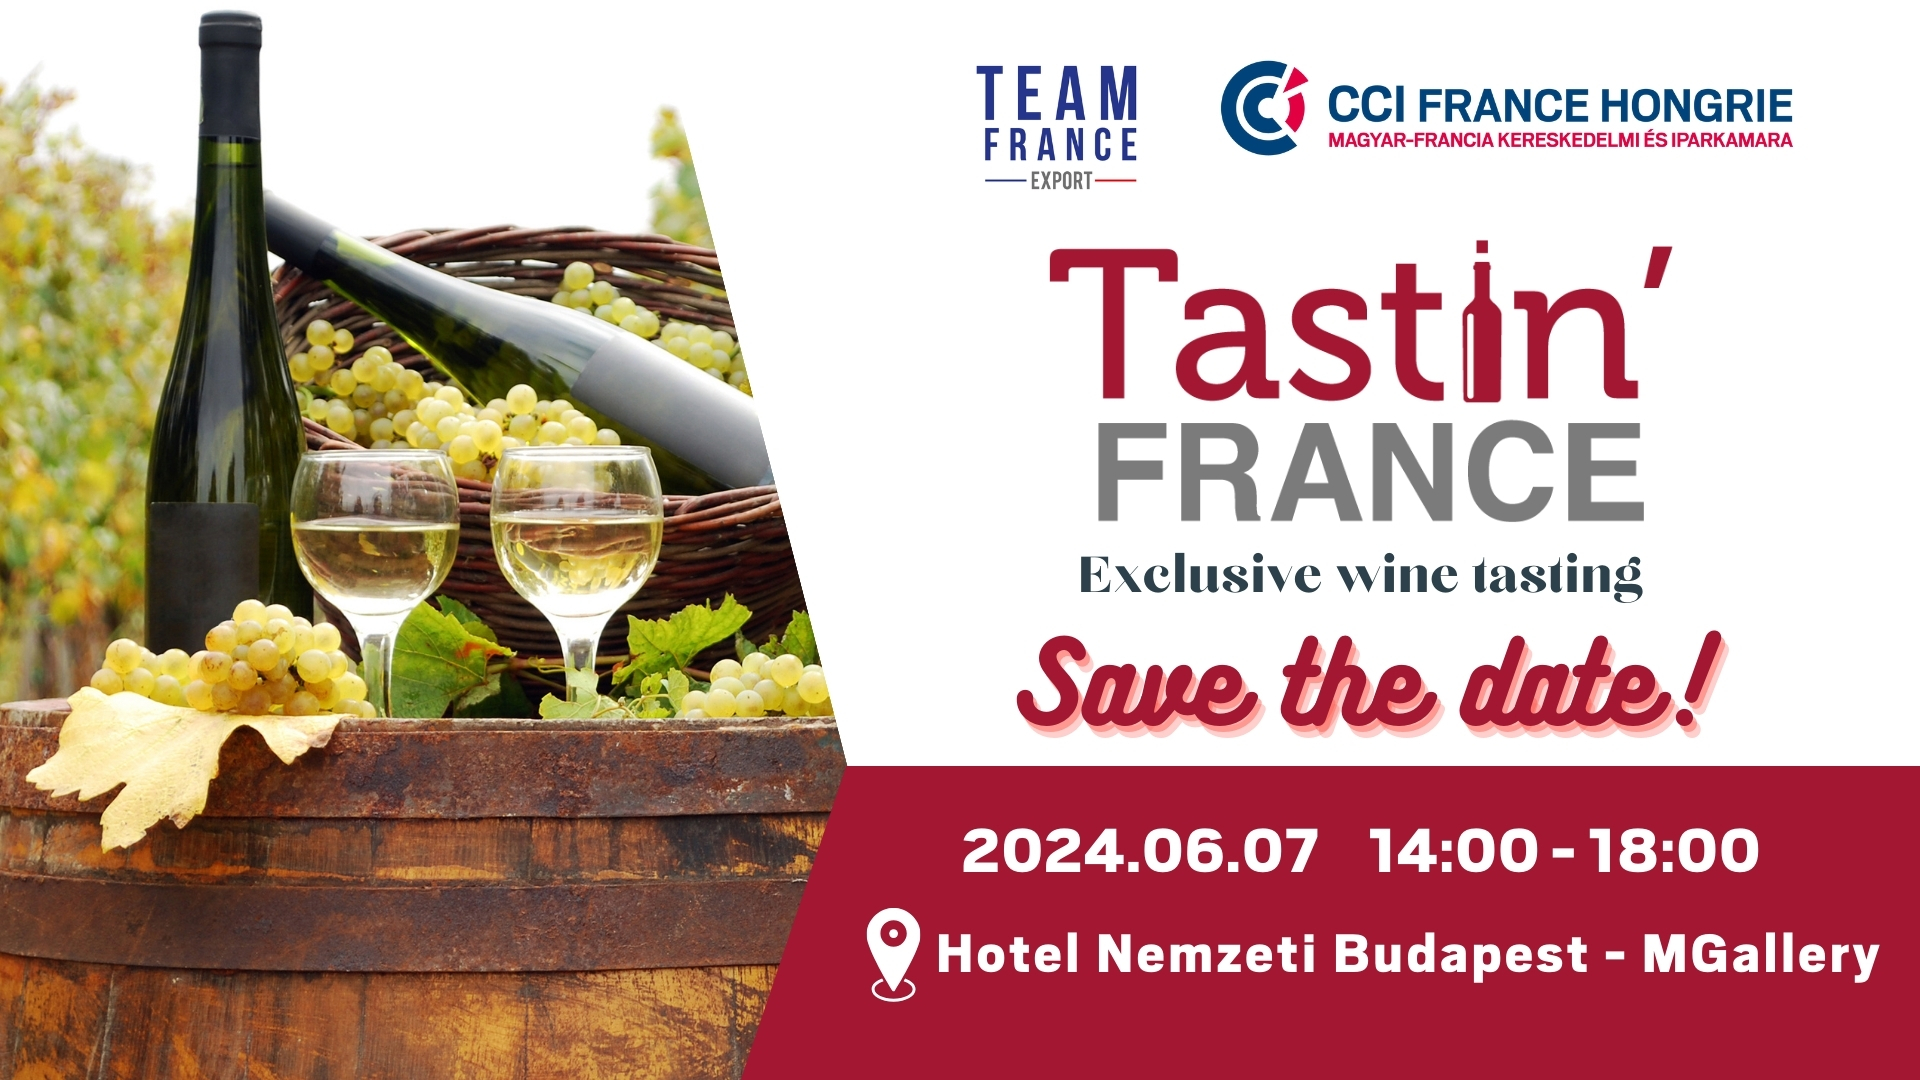 Tastin' France 2024 Wine Event Coming in June